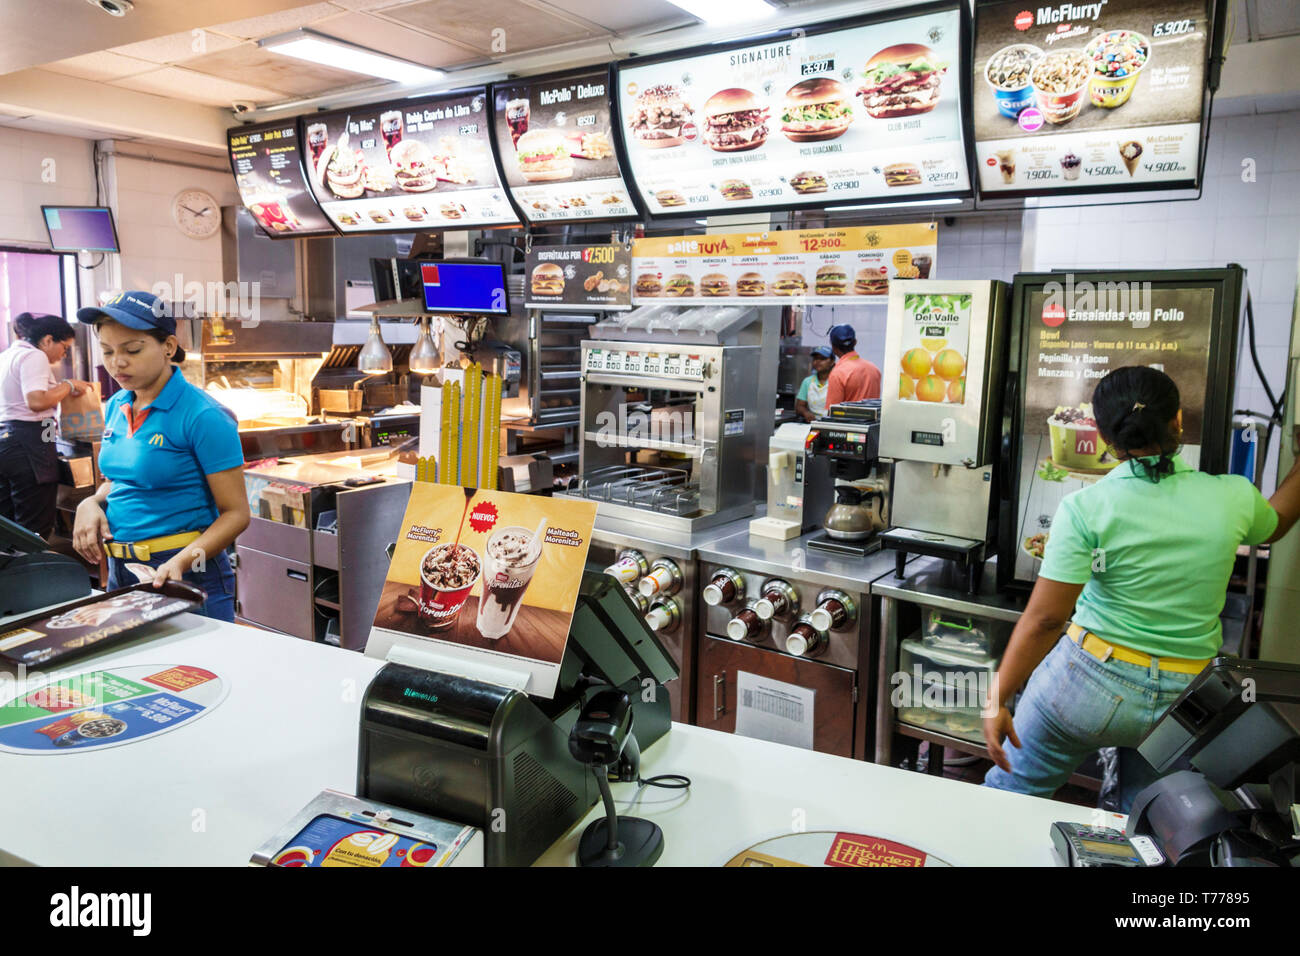 Cartagena Colombia,Bocagrande,McDonald's,hamburgers fast food,restaurant restaurants dining eating out cafe cafes bistro,inside interior,counter,Hispa Stock Photo